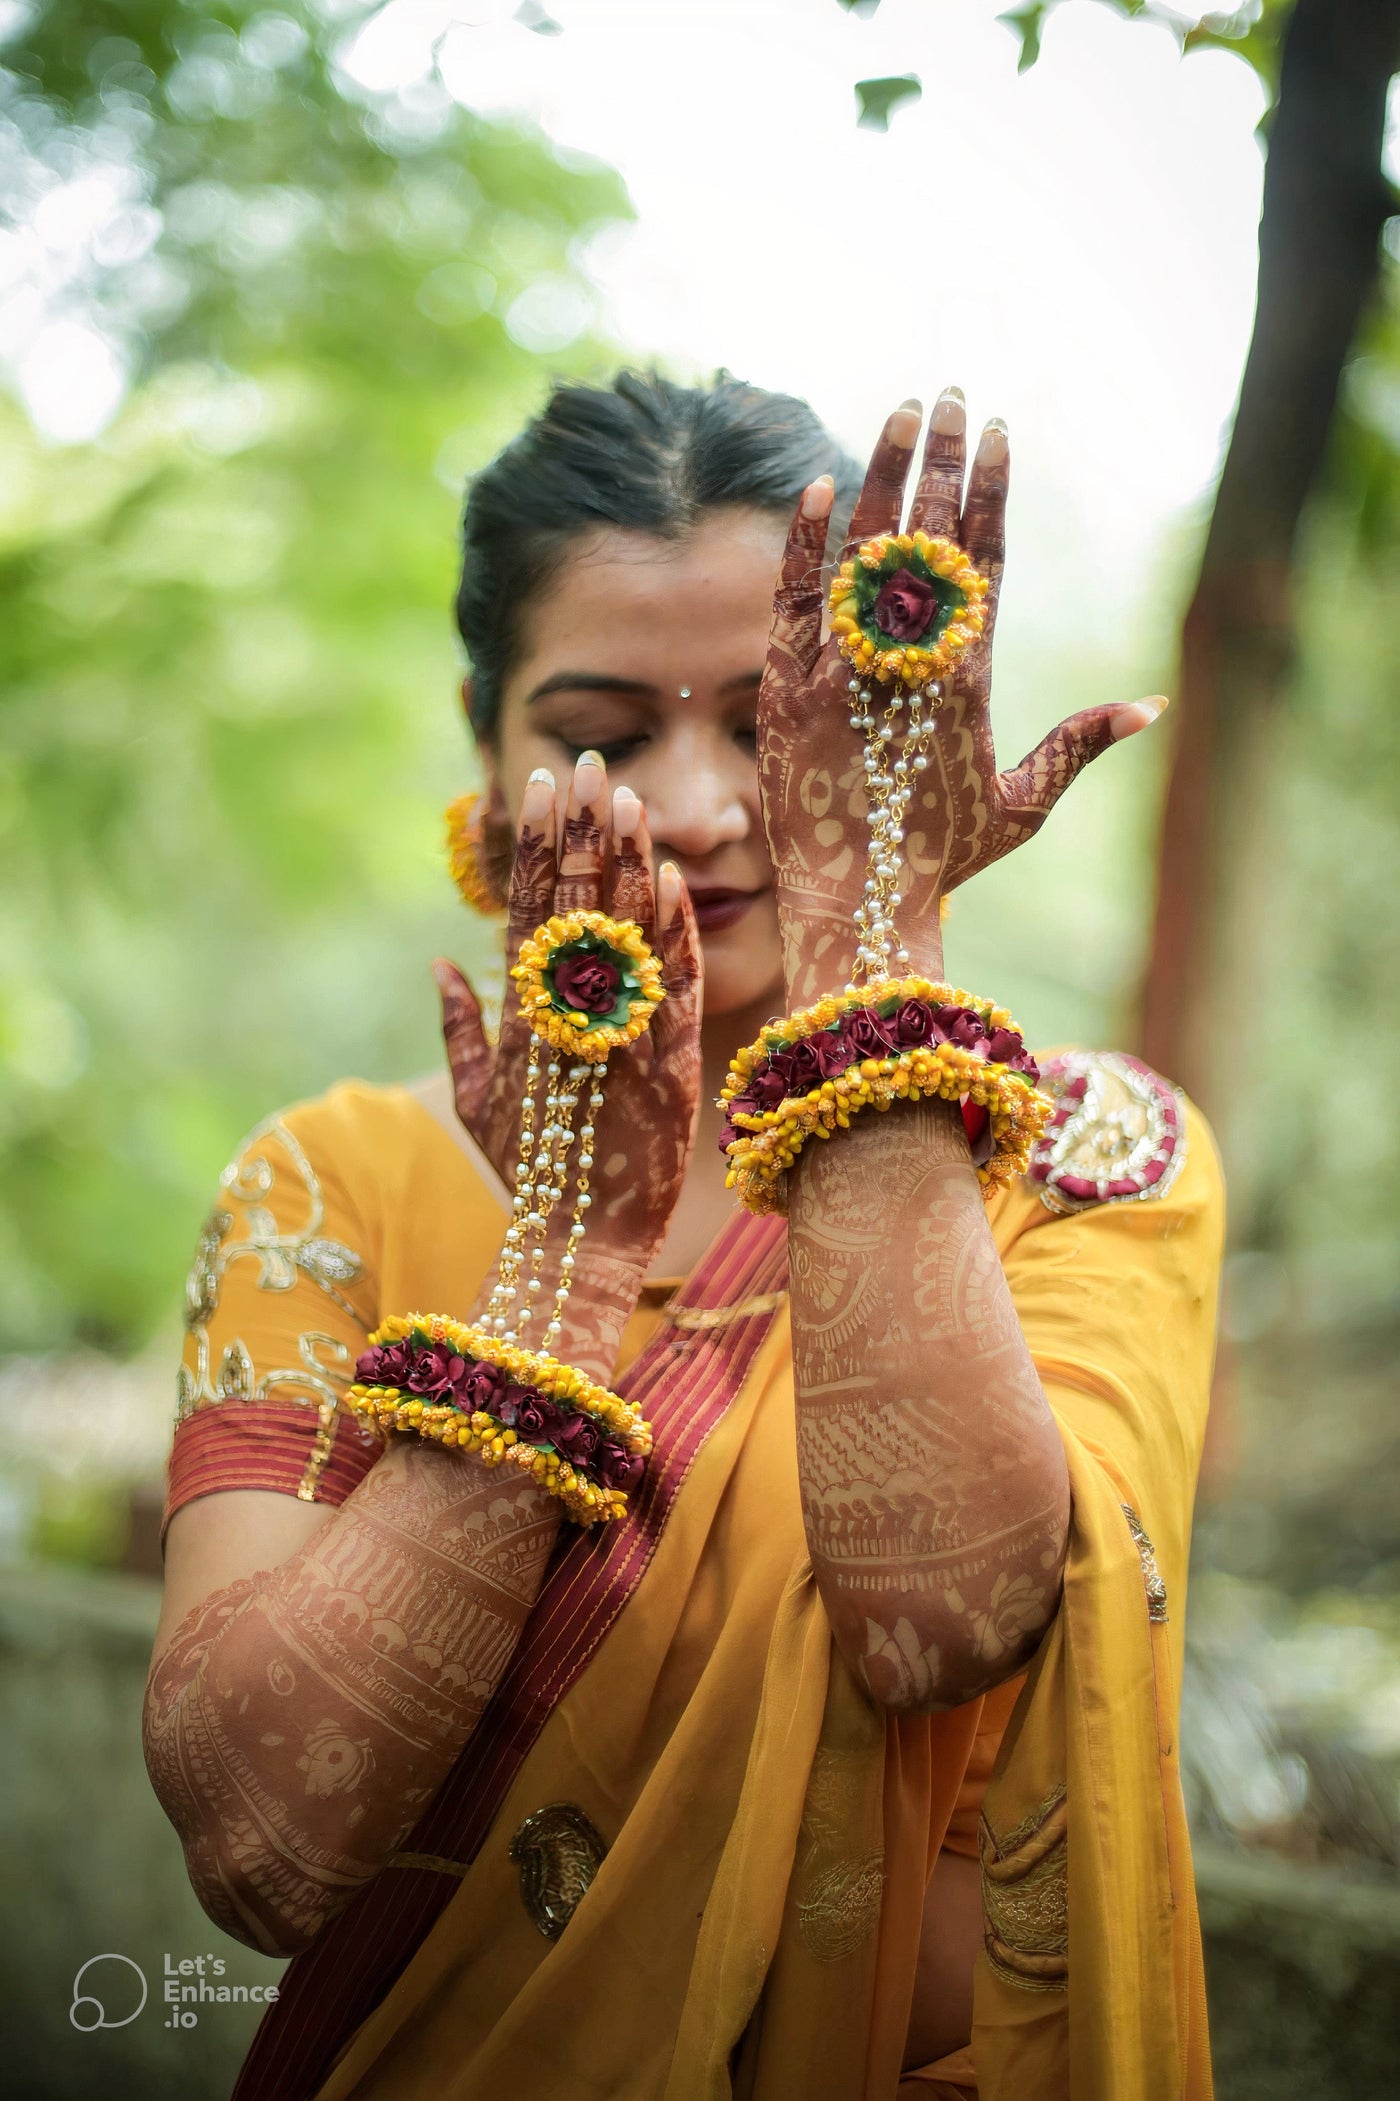 That Haldi ceremony though! | Bridal photography poses, Bridal photography,  Indian wedding photography poses